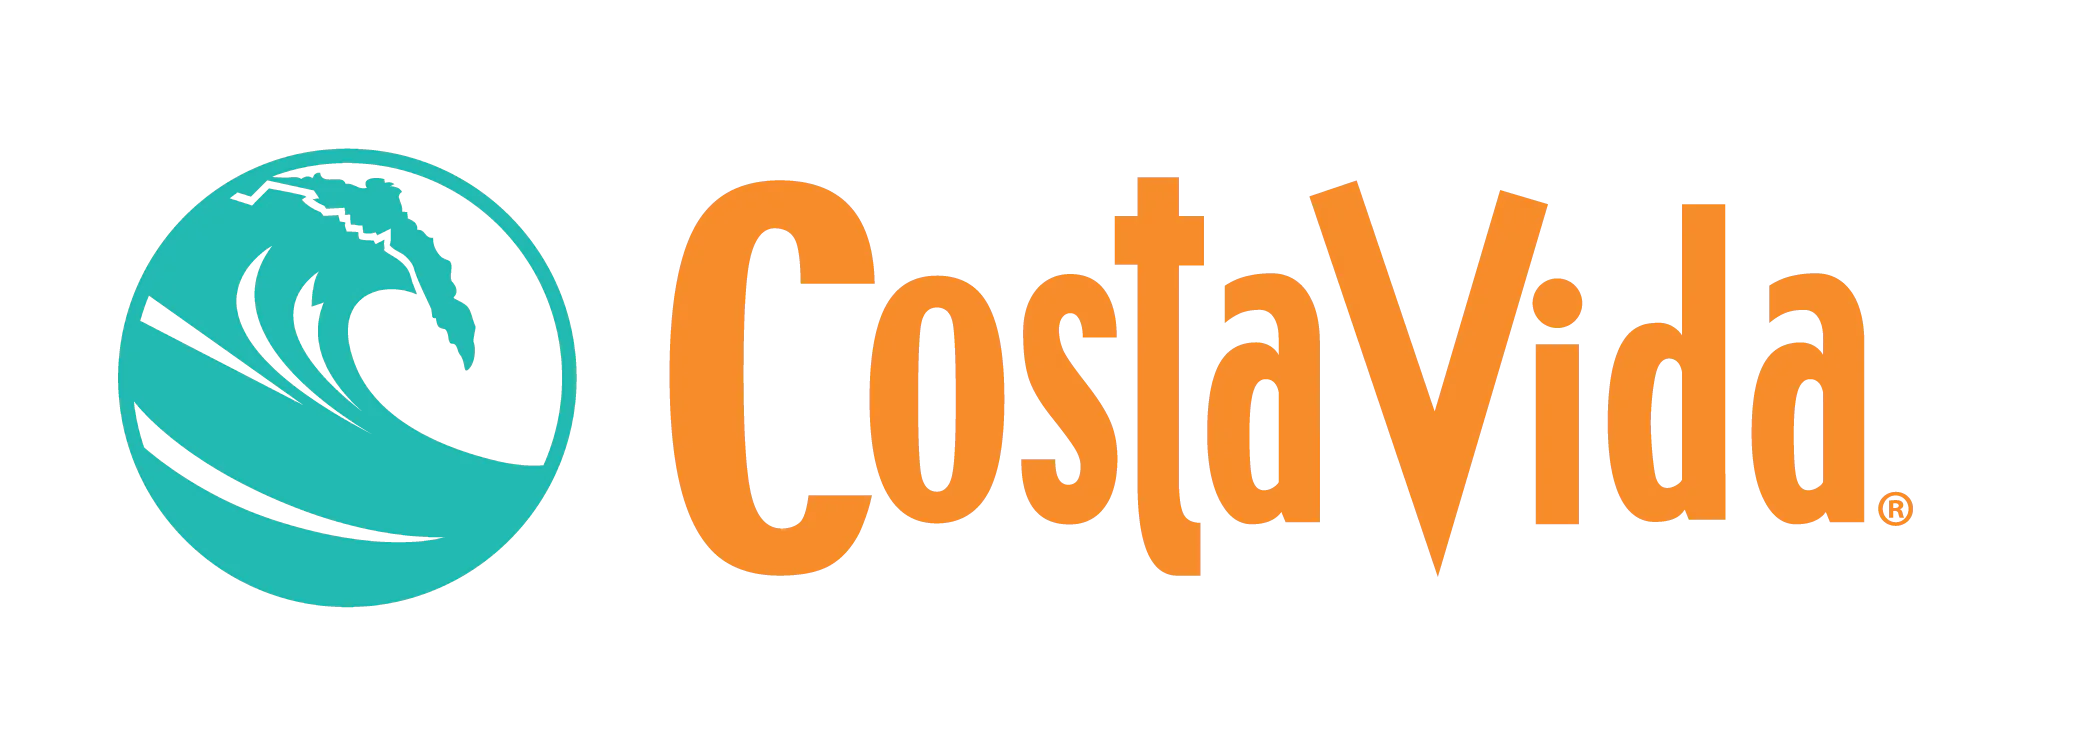 Costavida.net/survey